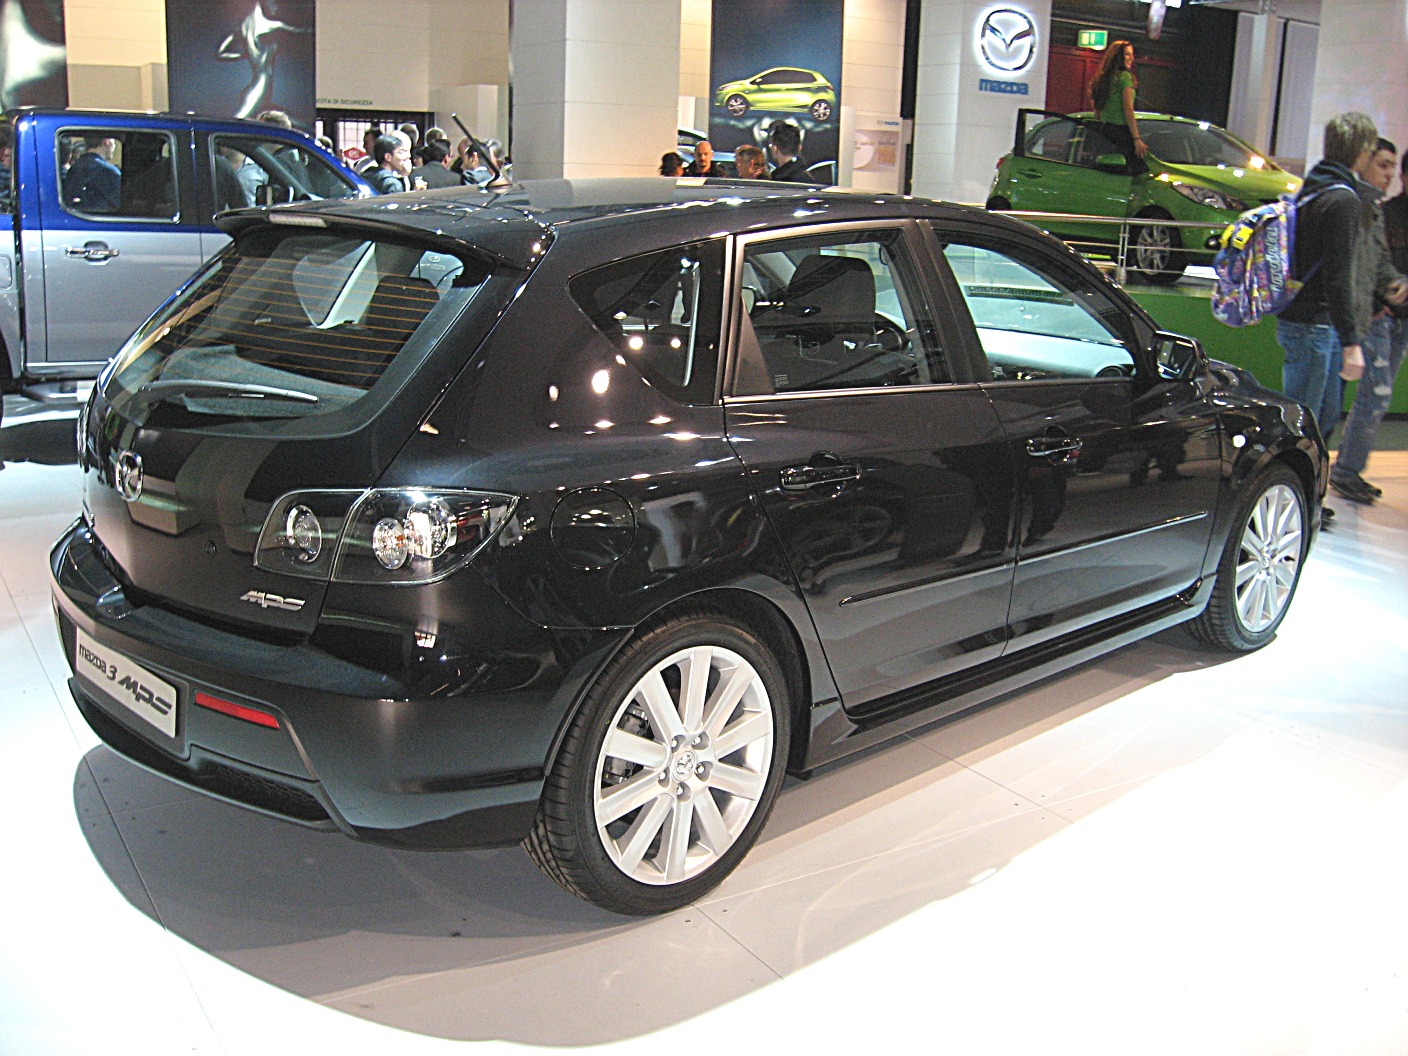 File:Mazda-3 Rear-view.JPG - Wikimedia Commons